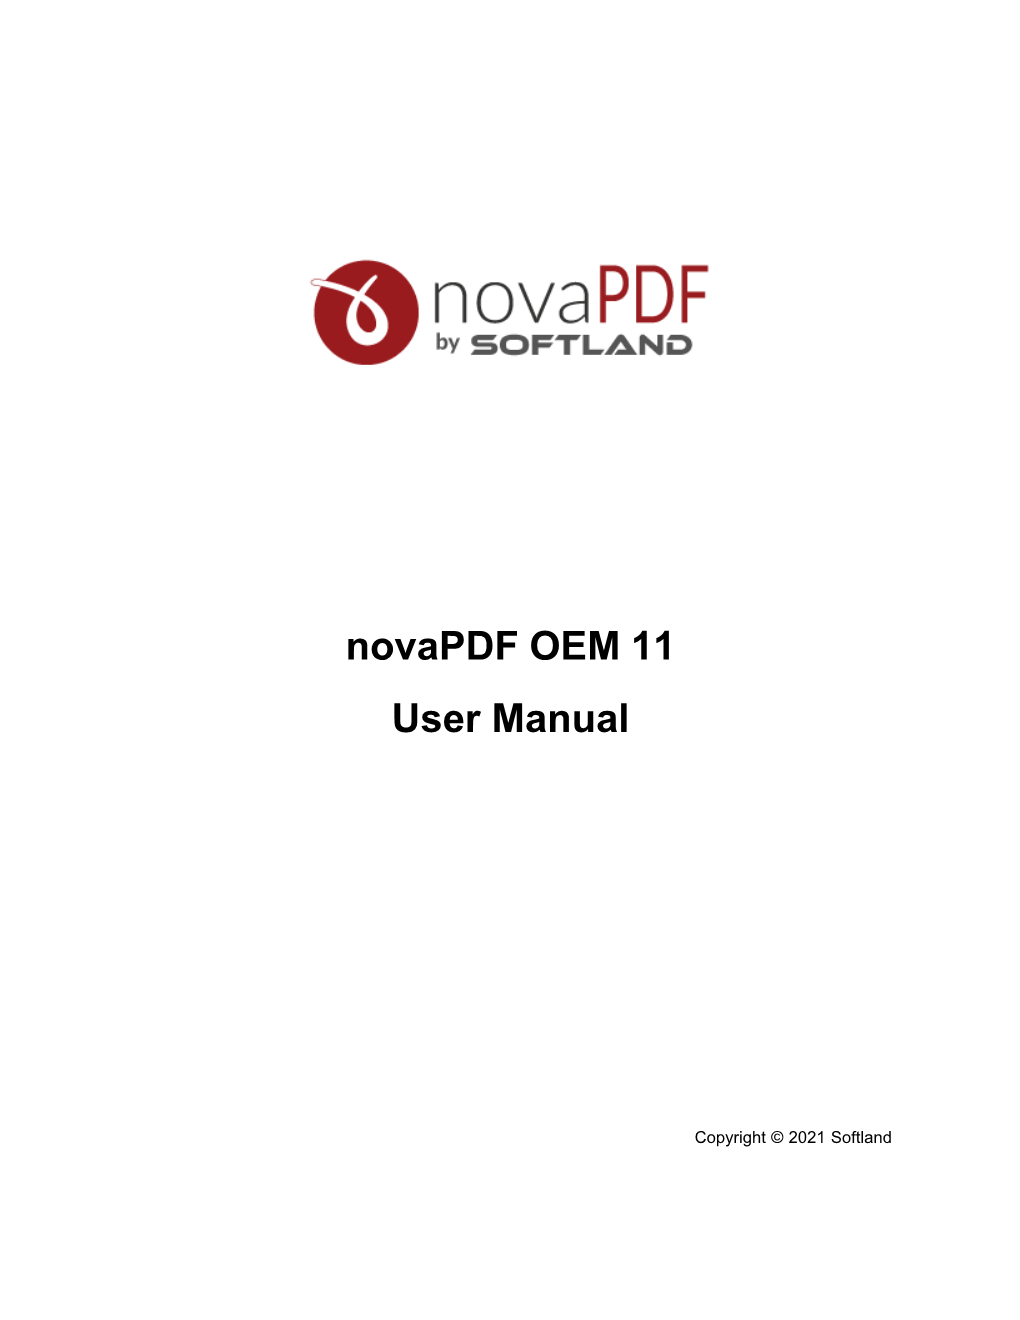 Novapdf OEM 11 User Manual